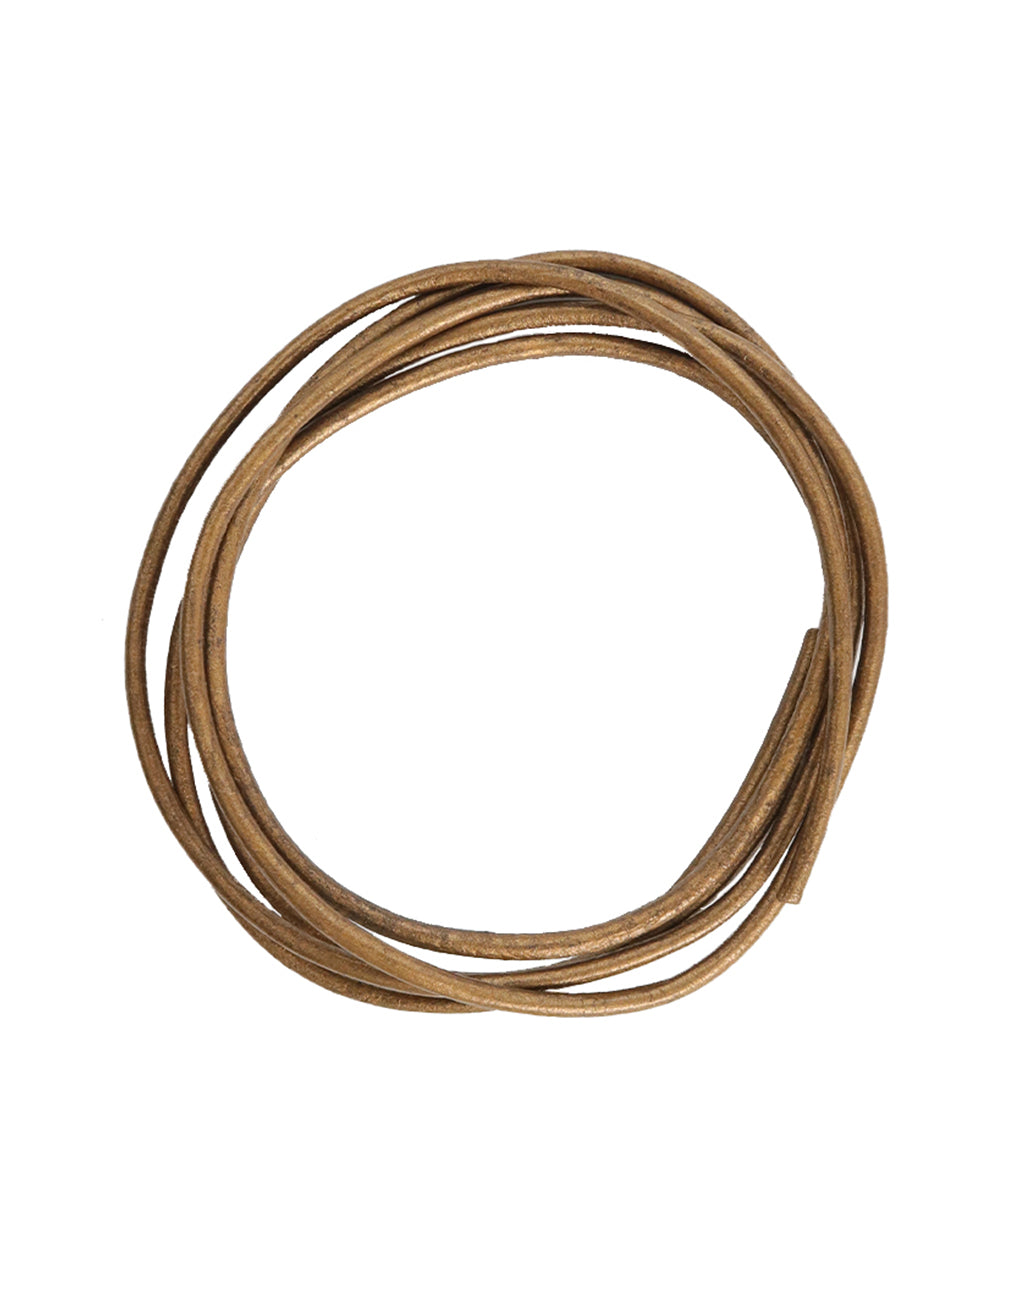 Metallic Bronze Round Leather Cord, 2mm, (9ft)